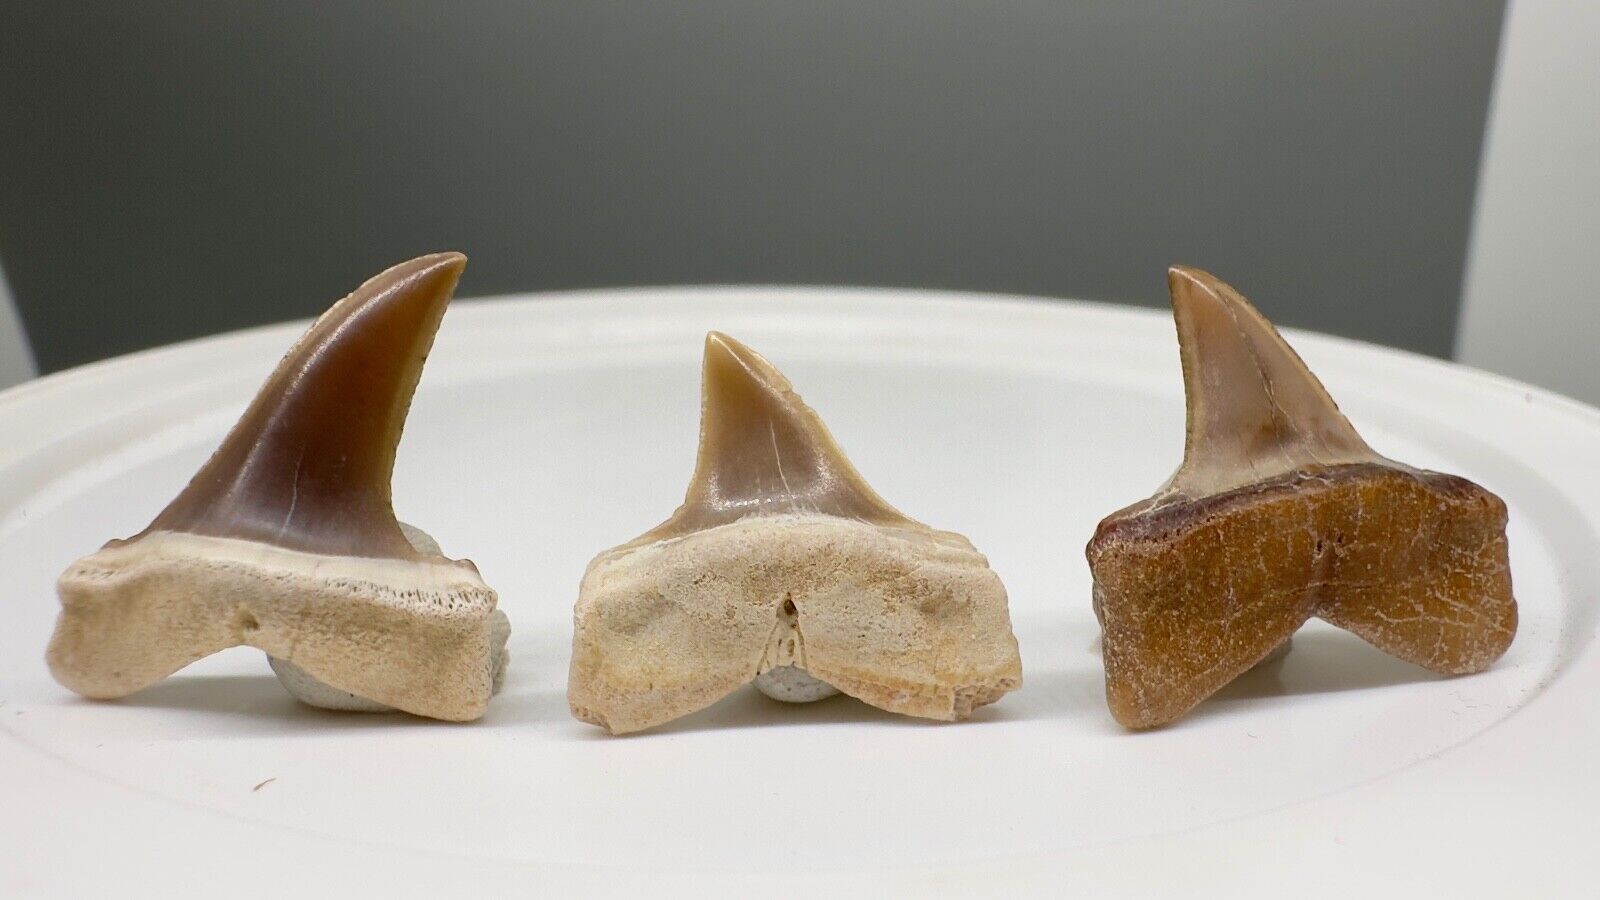 Group of 3 Fossil LONGFIN MAKO Shark Teeth - Ica, Peru